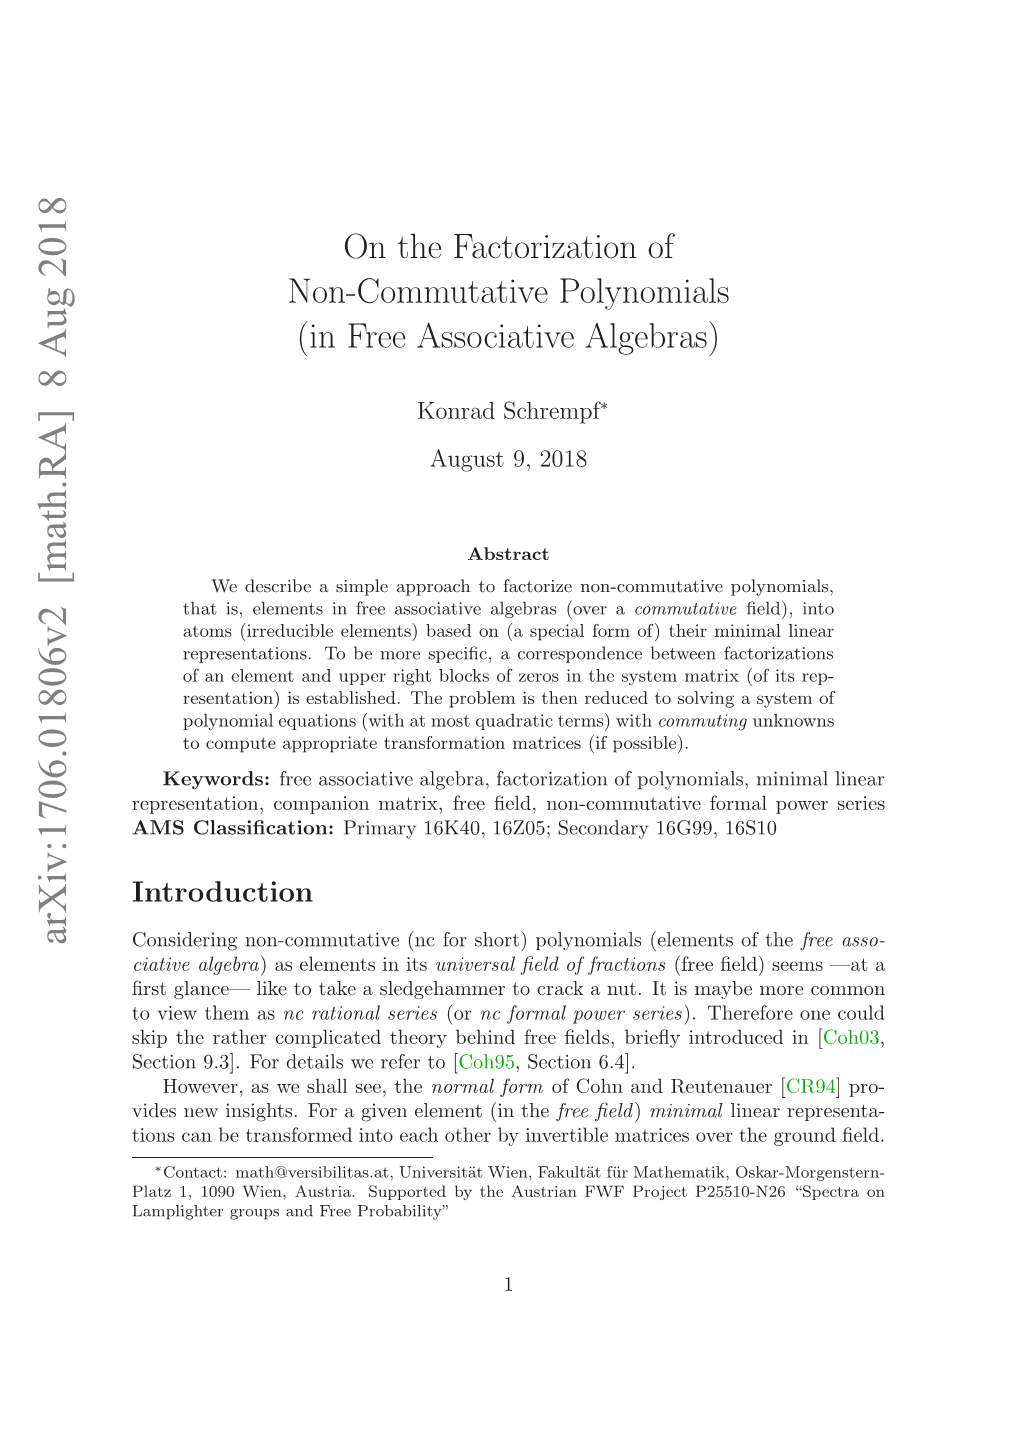 On the Factorization of Non-Commutative Polynomials (In